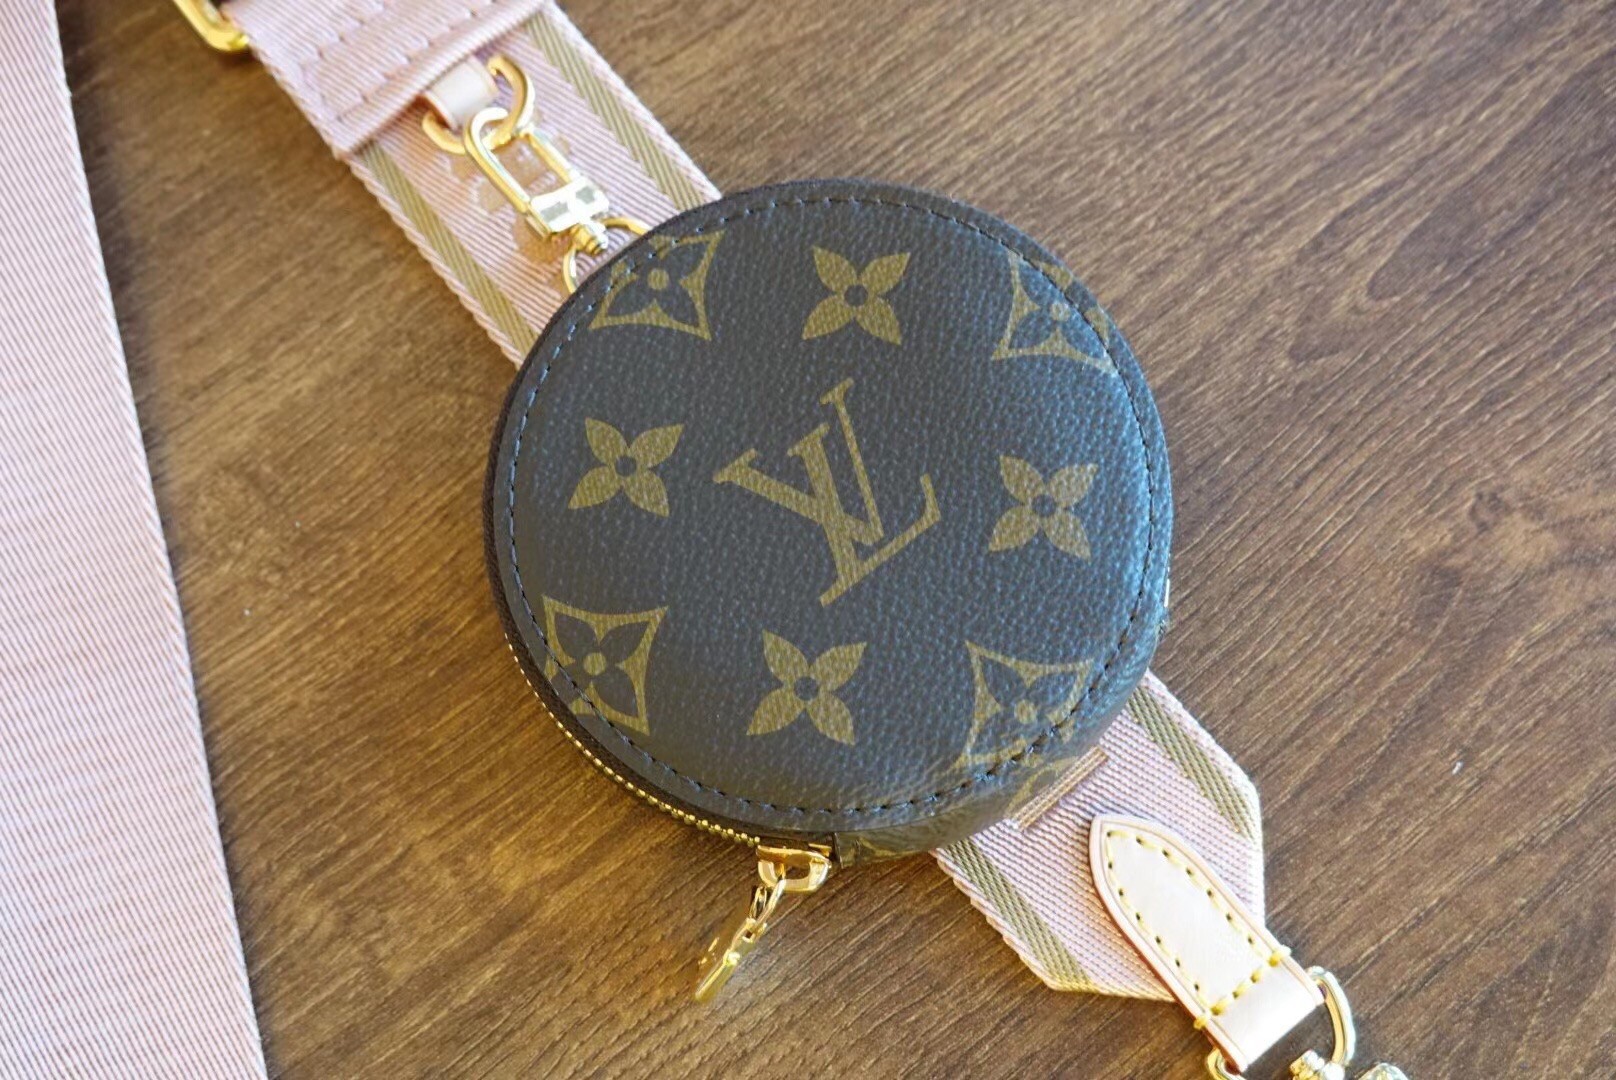 Louis Vuitton Strap & Monogram Coin Purse Bandouliere Jacquard Strap Only